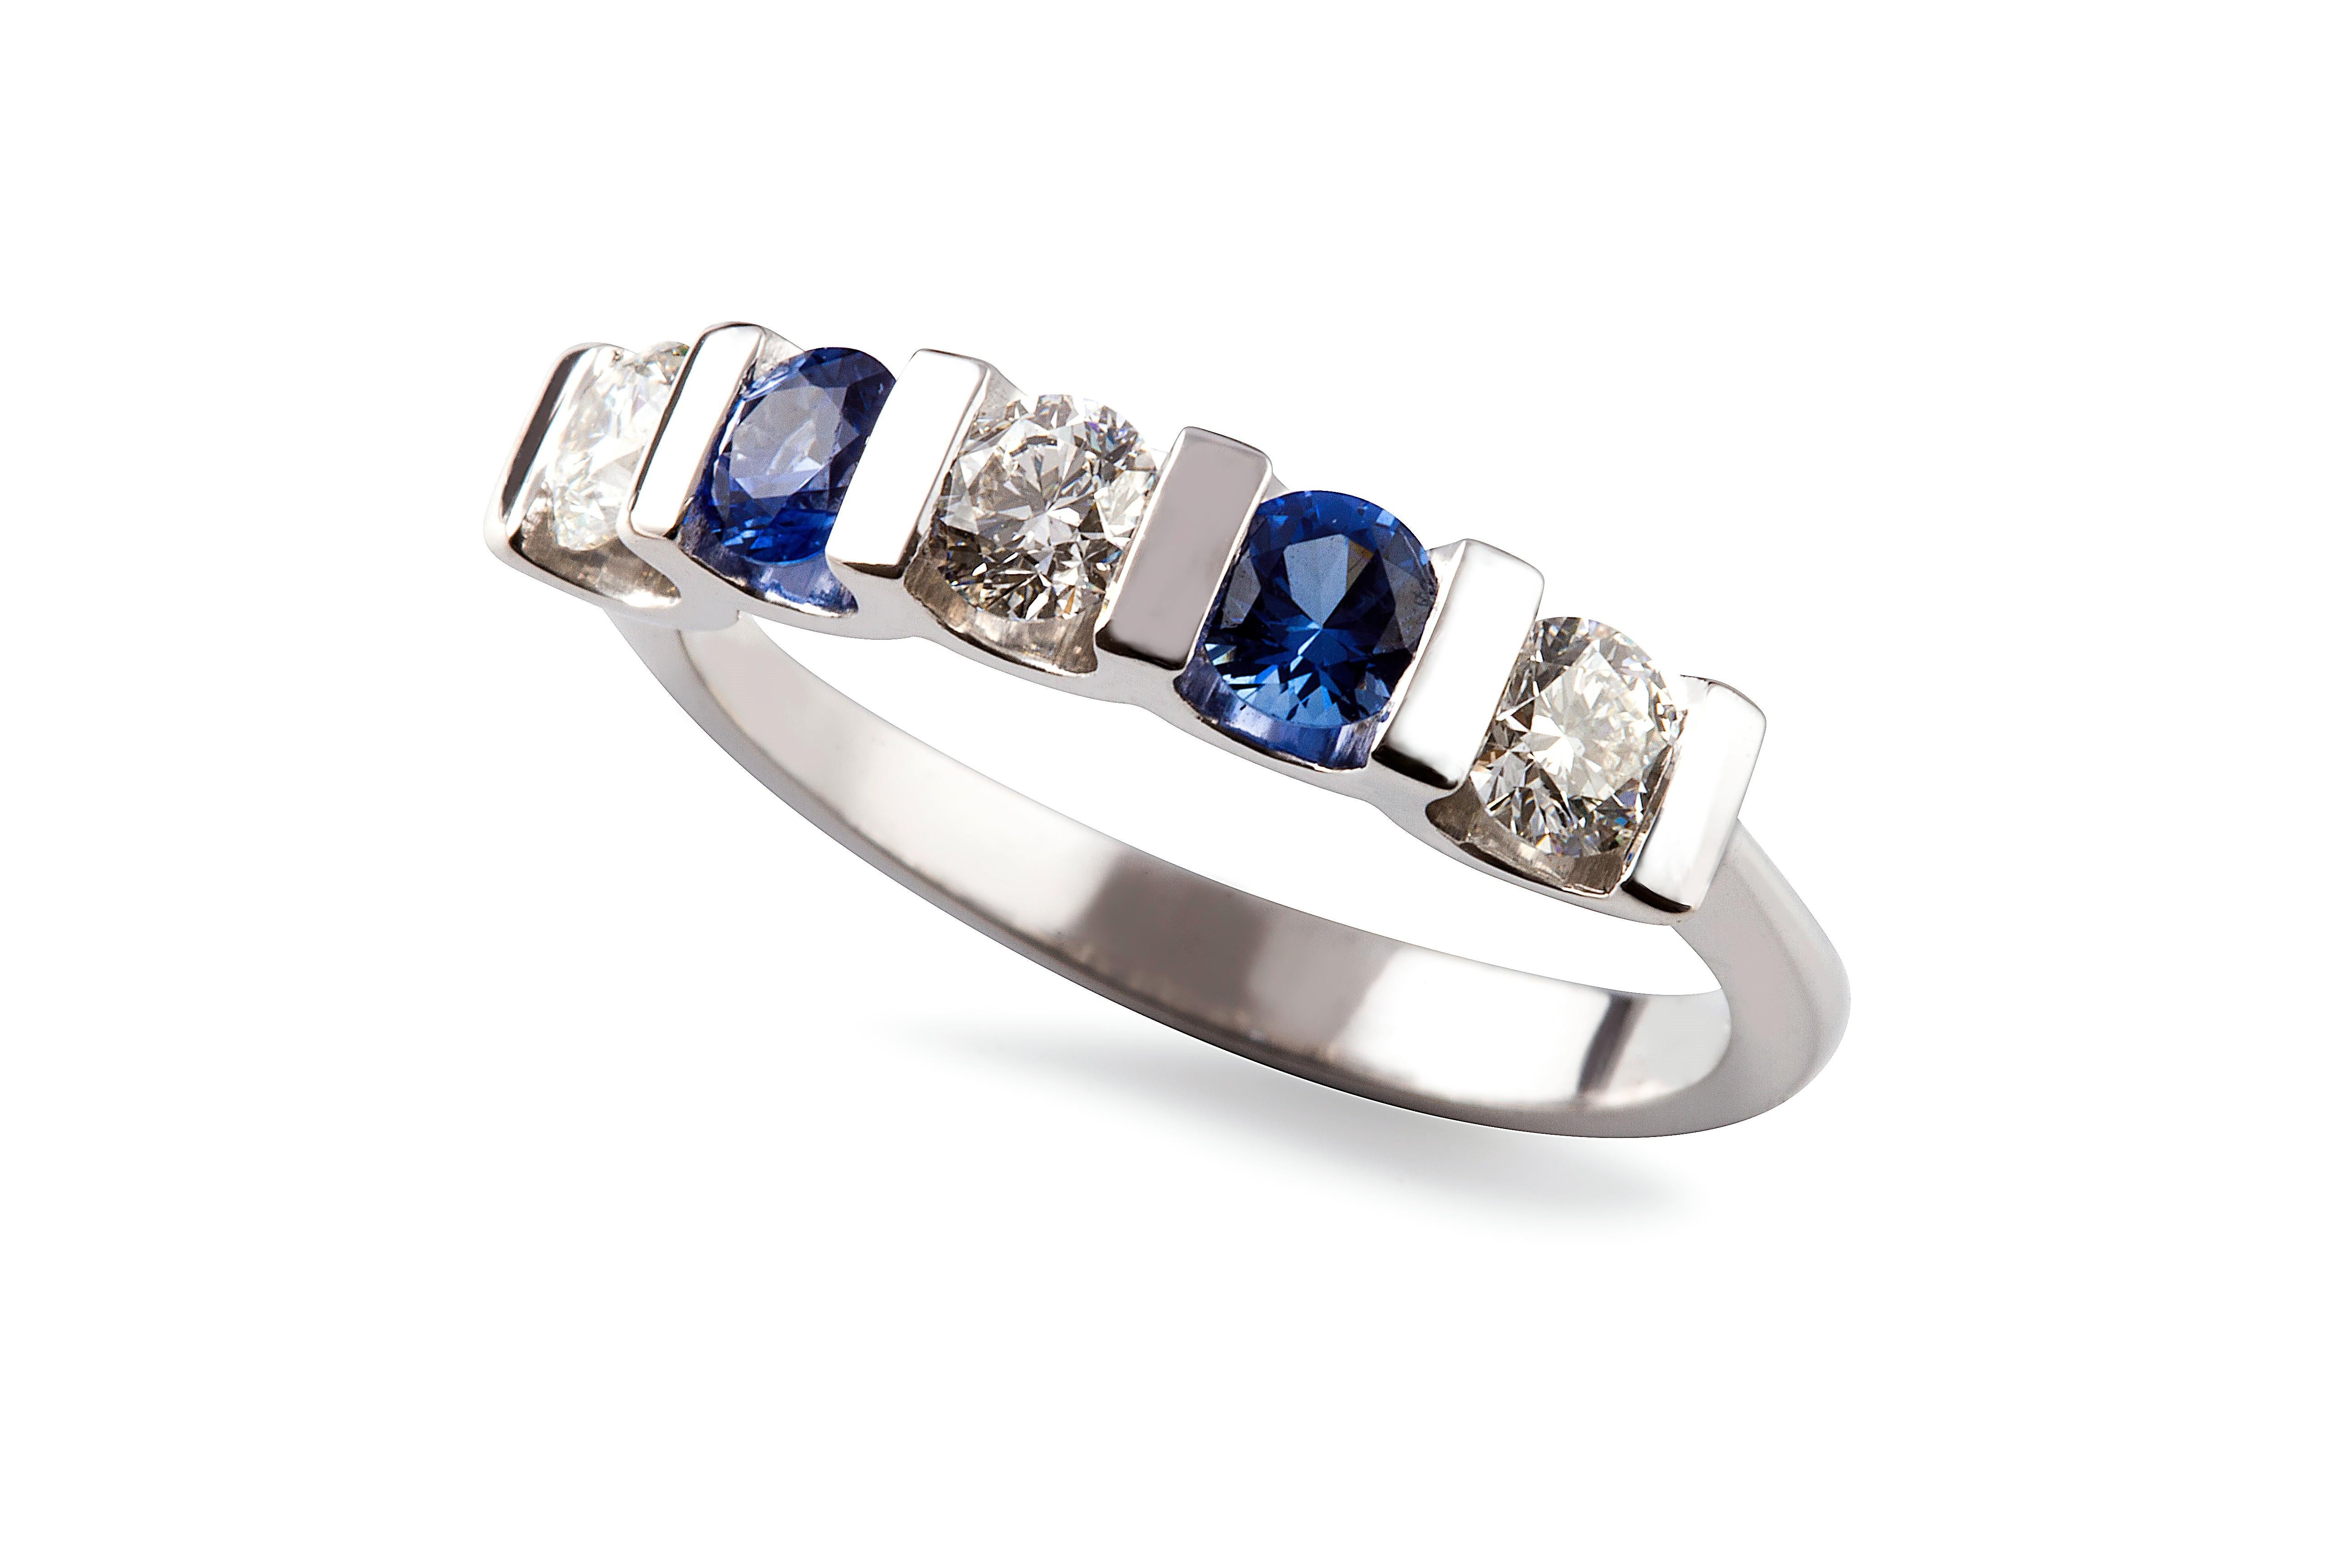 Art Deco Kian Design Five-Stones Ceylon Sapphire & Diamond Bridal Ring in 18k White Gold